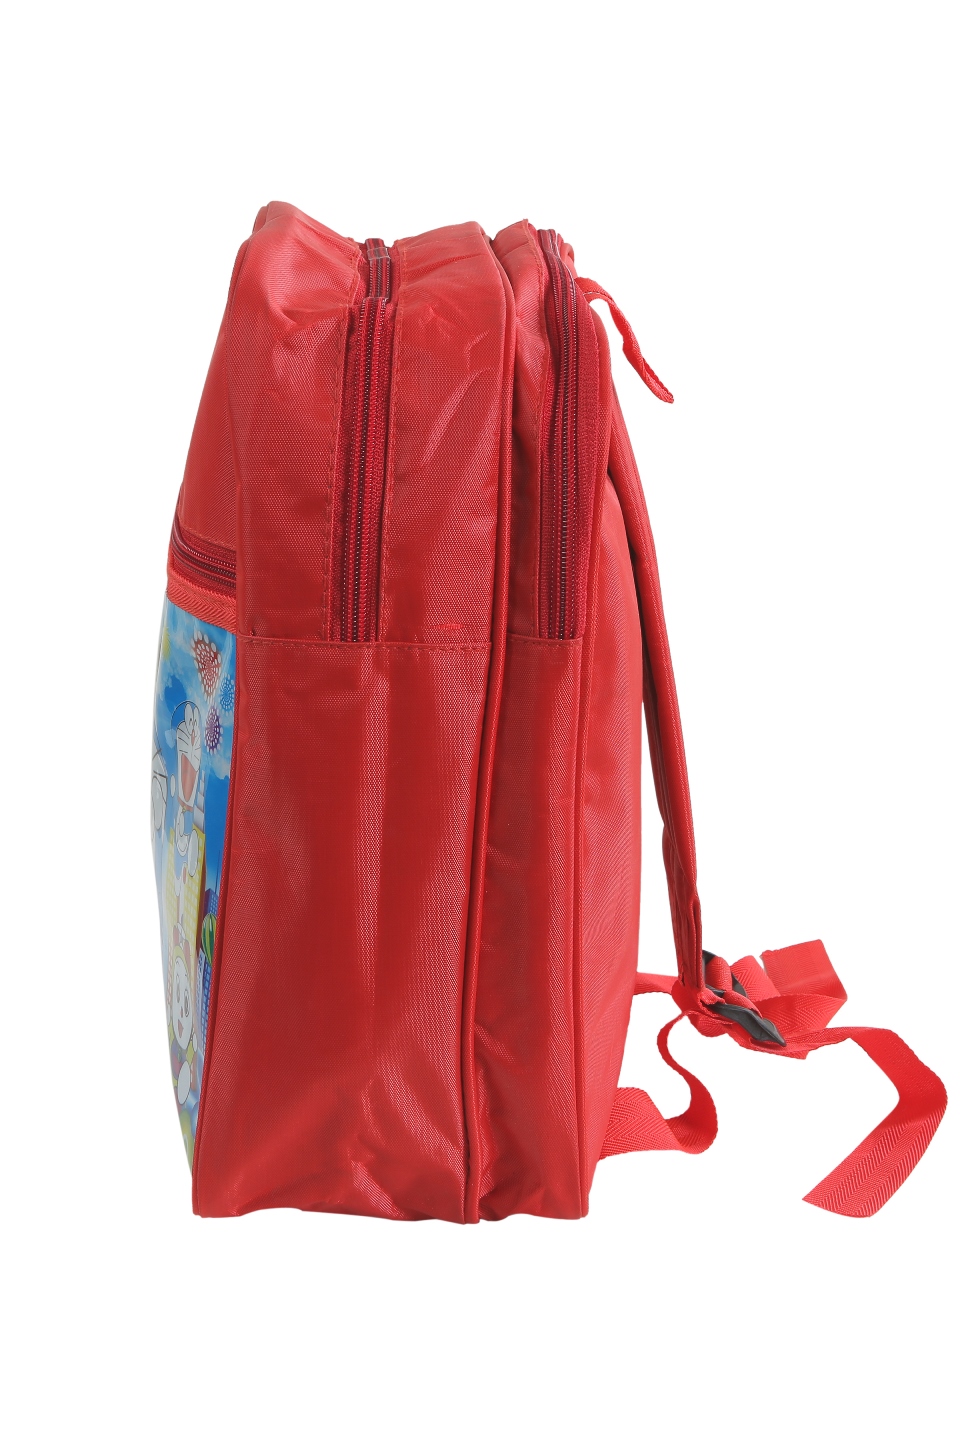 Buy Nandini Doremon Red Blue School Bag Online @ ₹599 from ShopClues